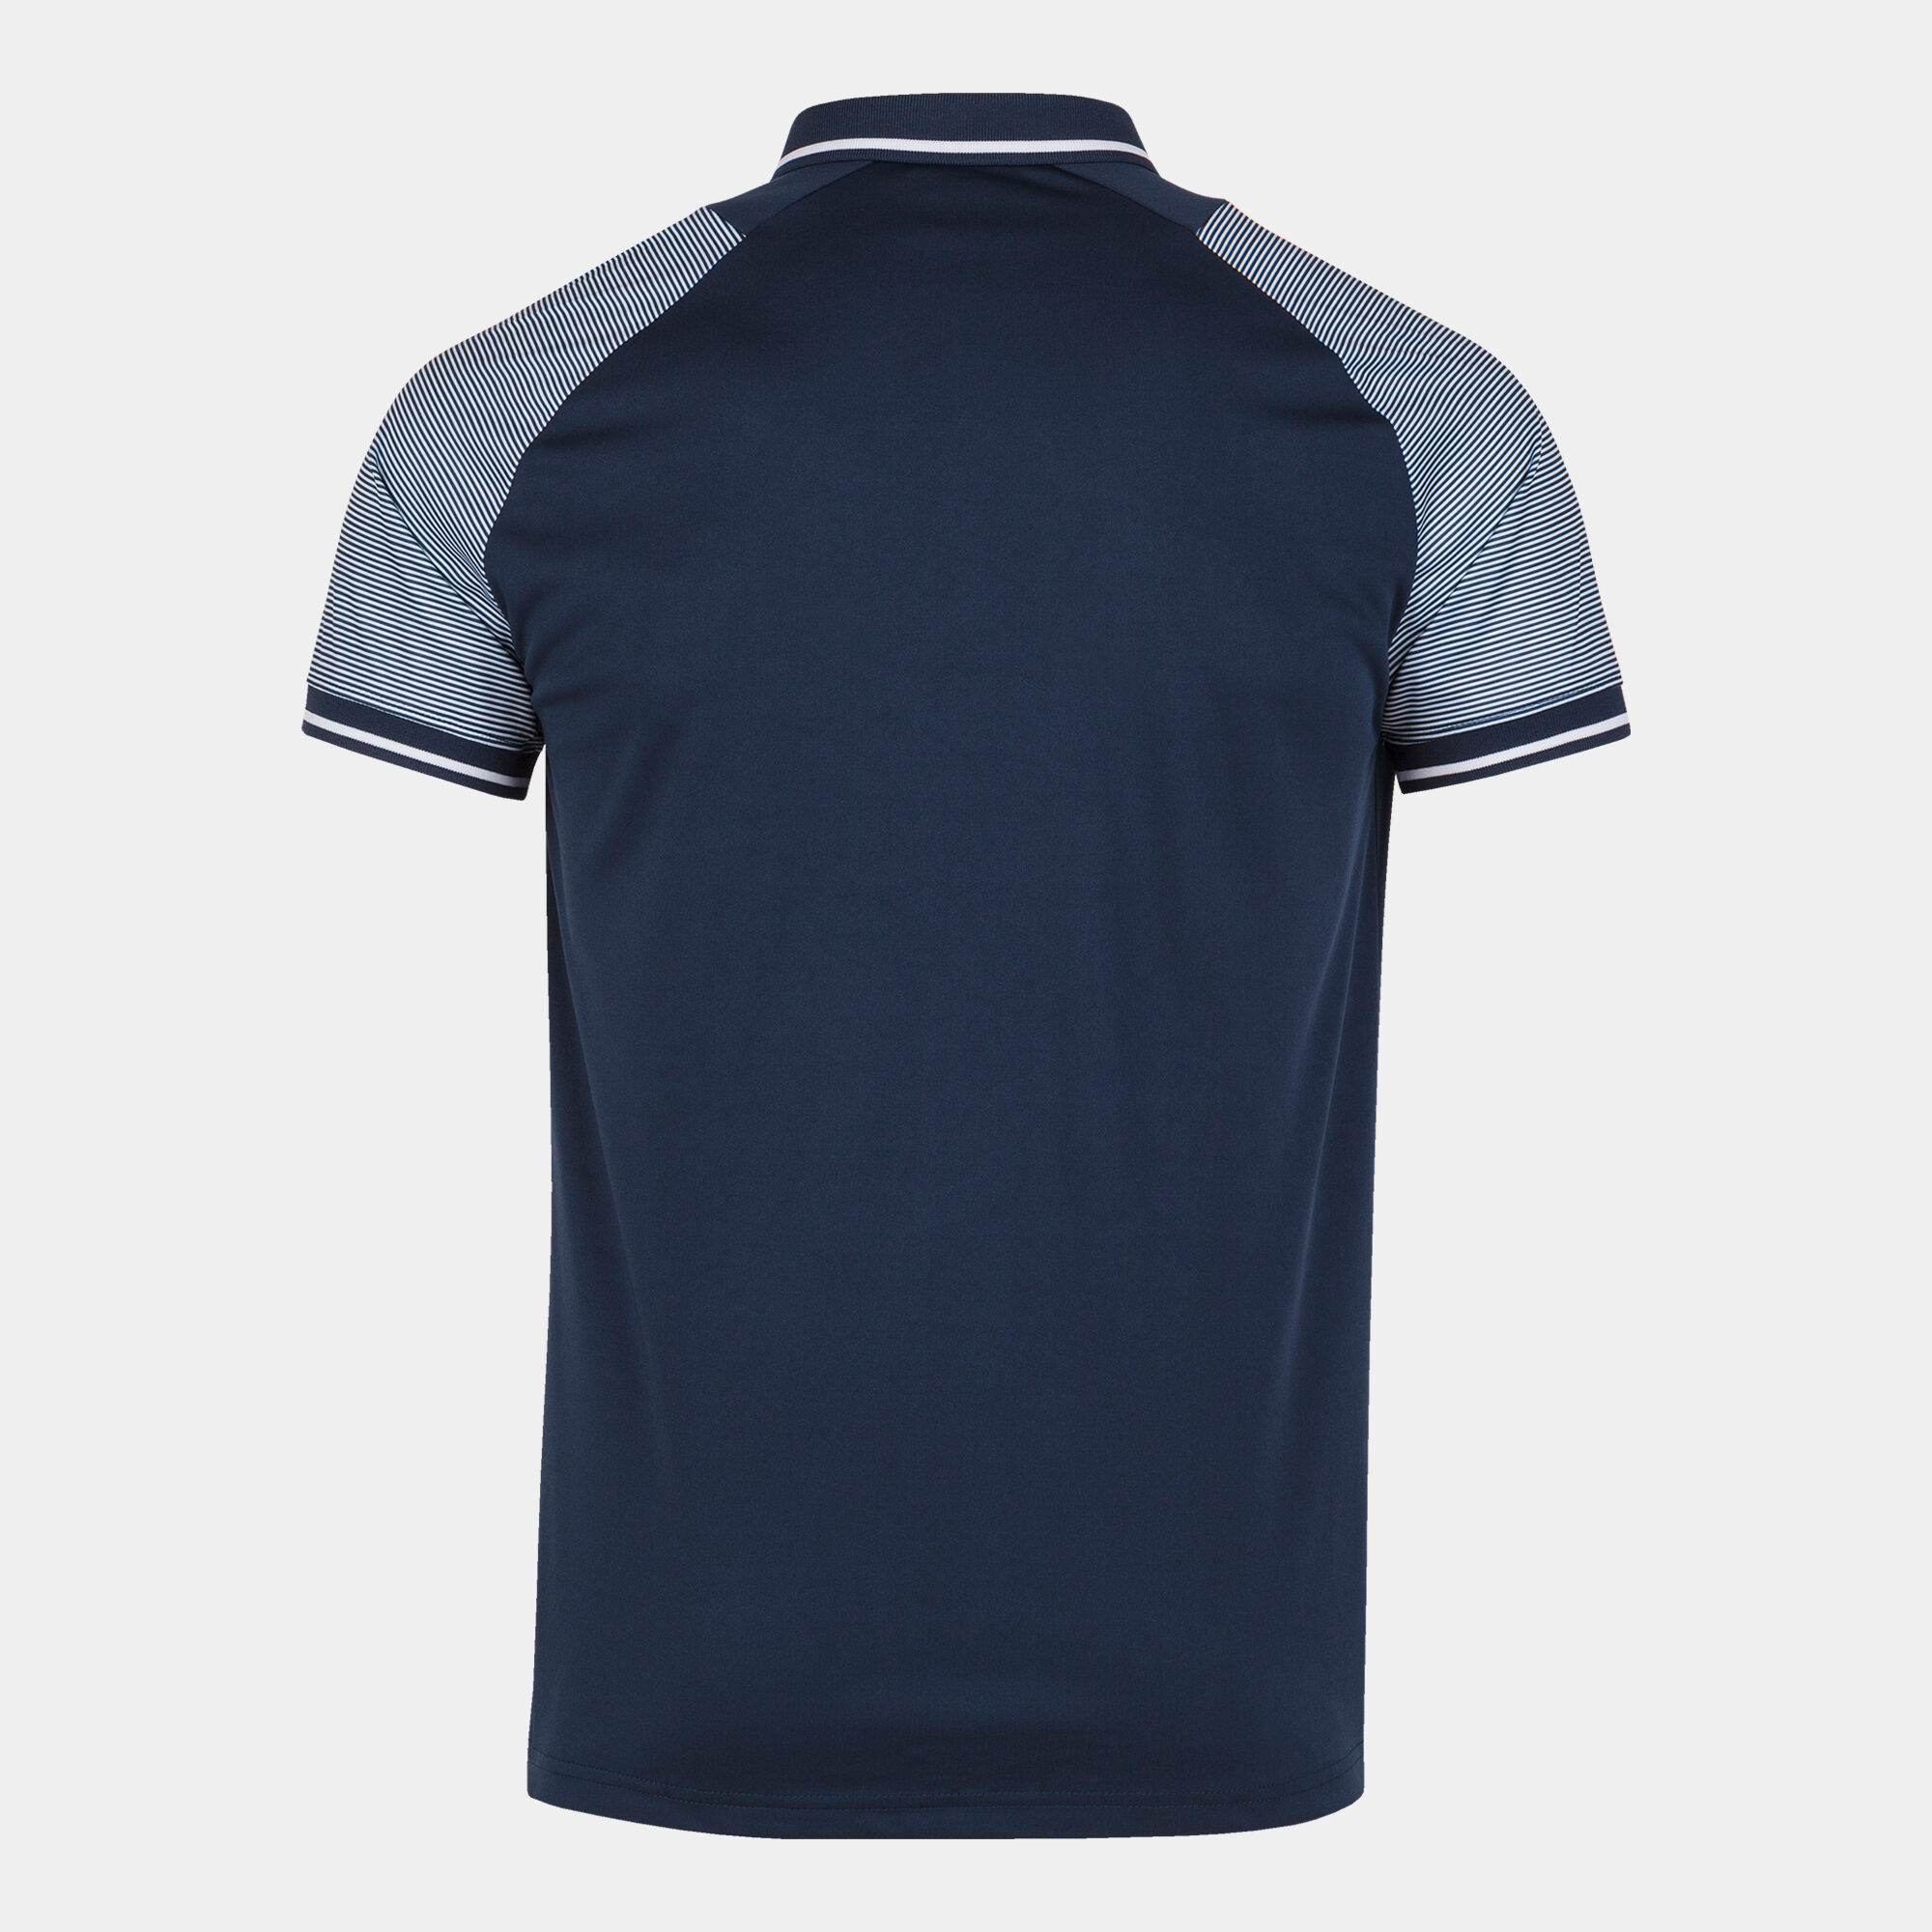 Polo shirt short-sleeve man Essential II navy blue white